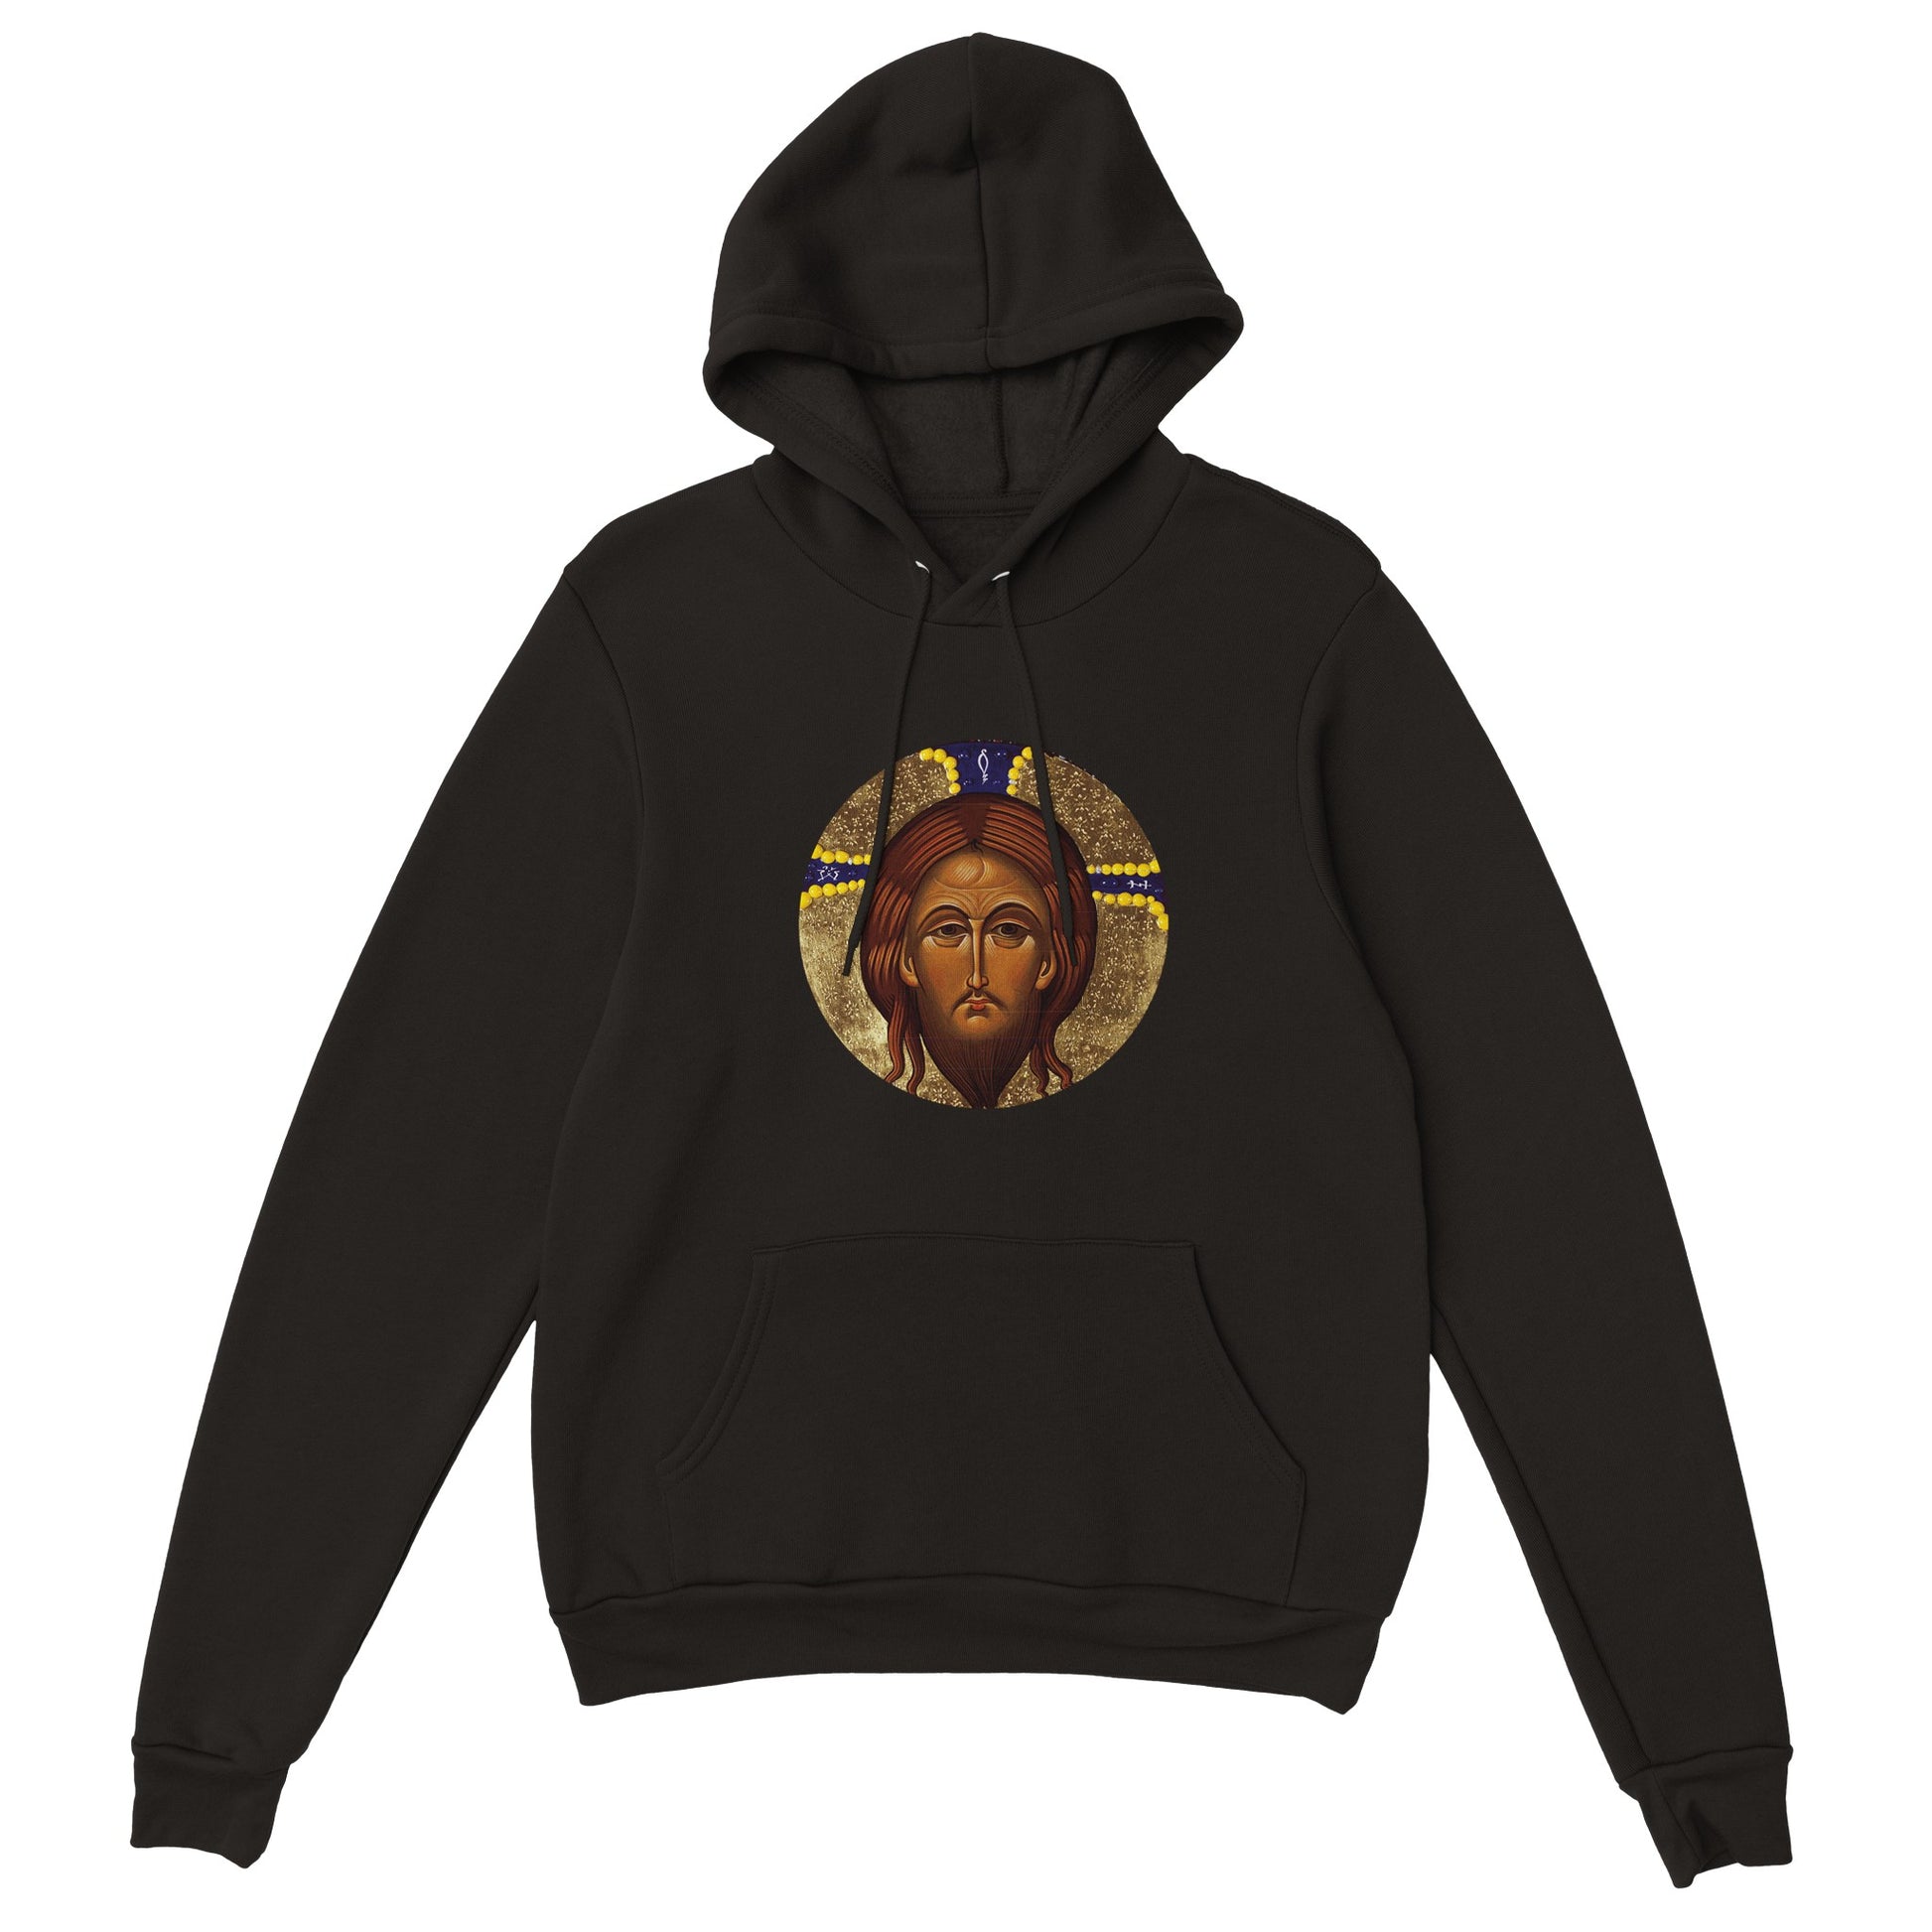 Christian ICON hoodie